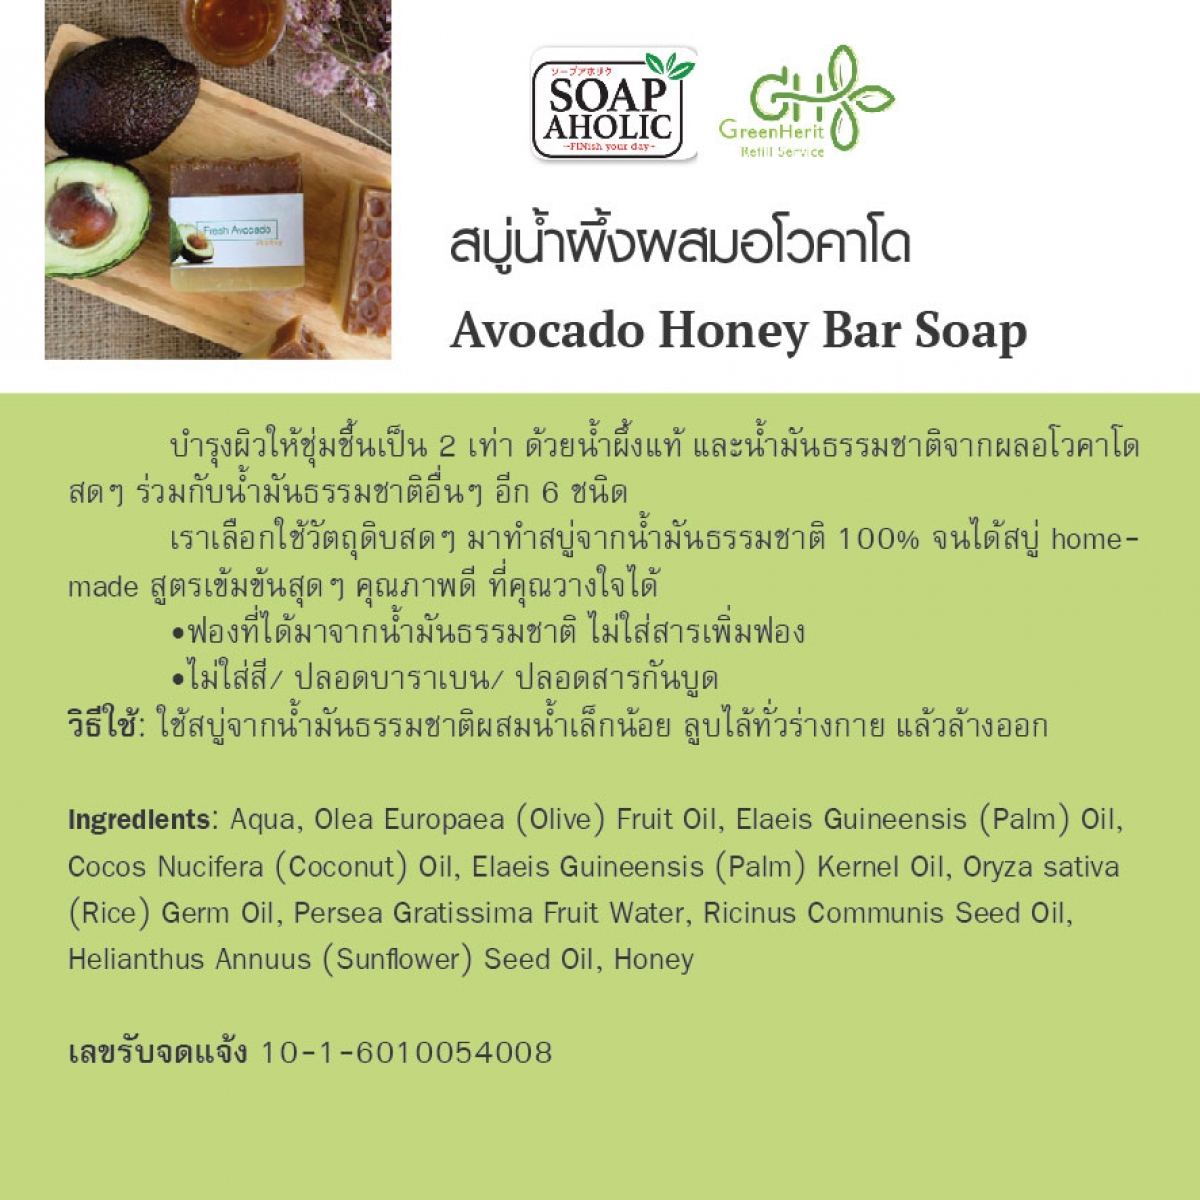 Organic Product > Avocado Honey Bar Soap